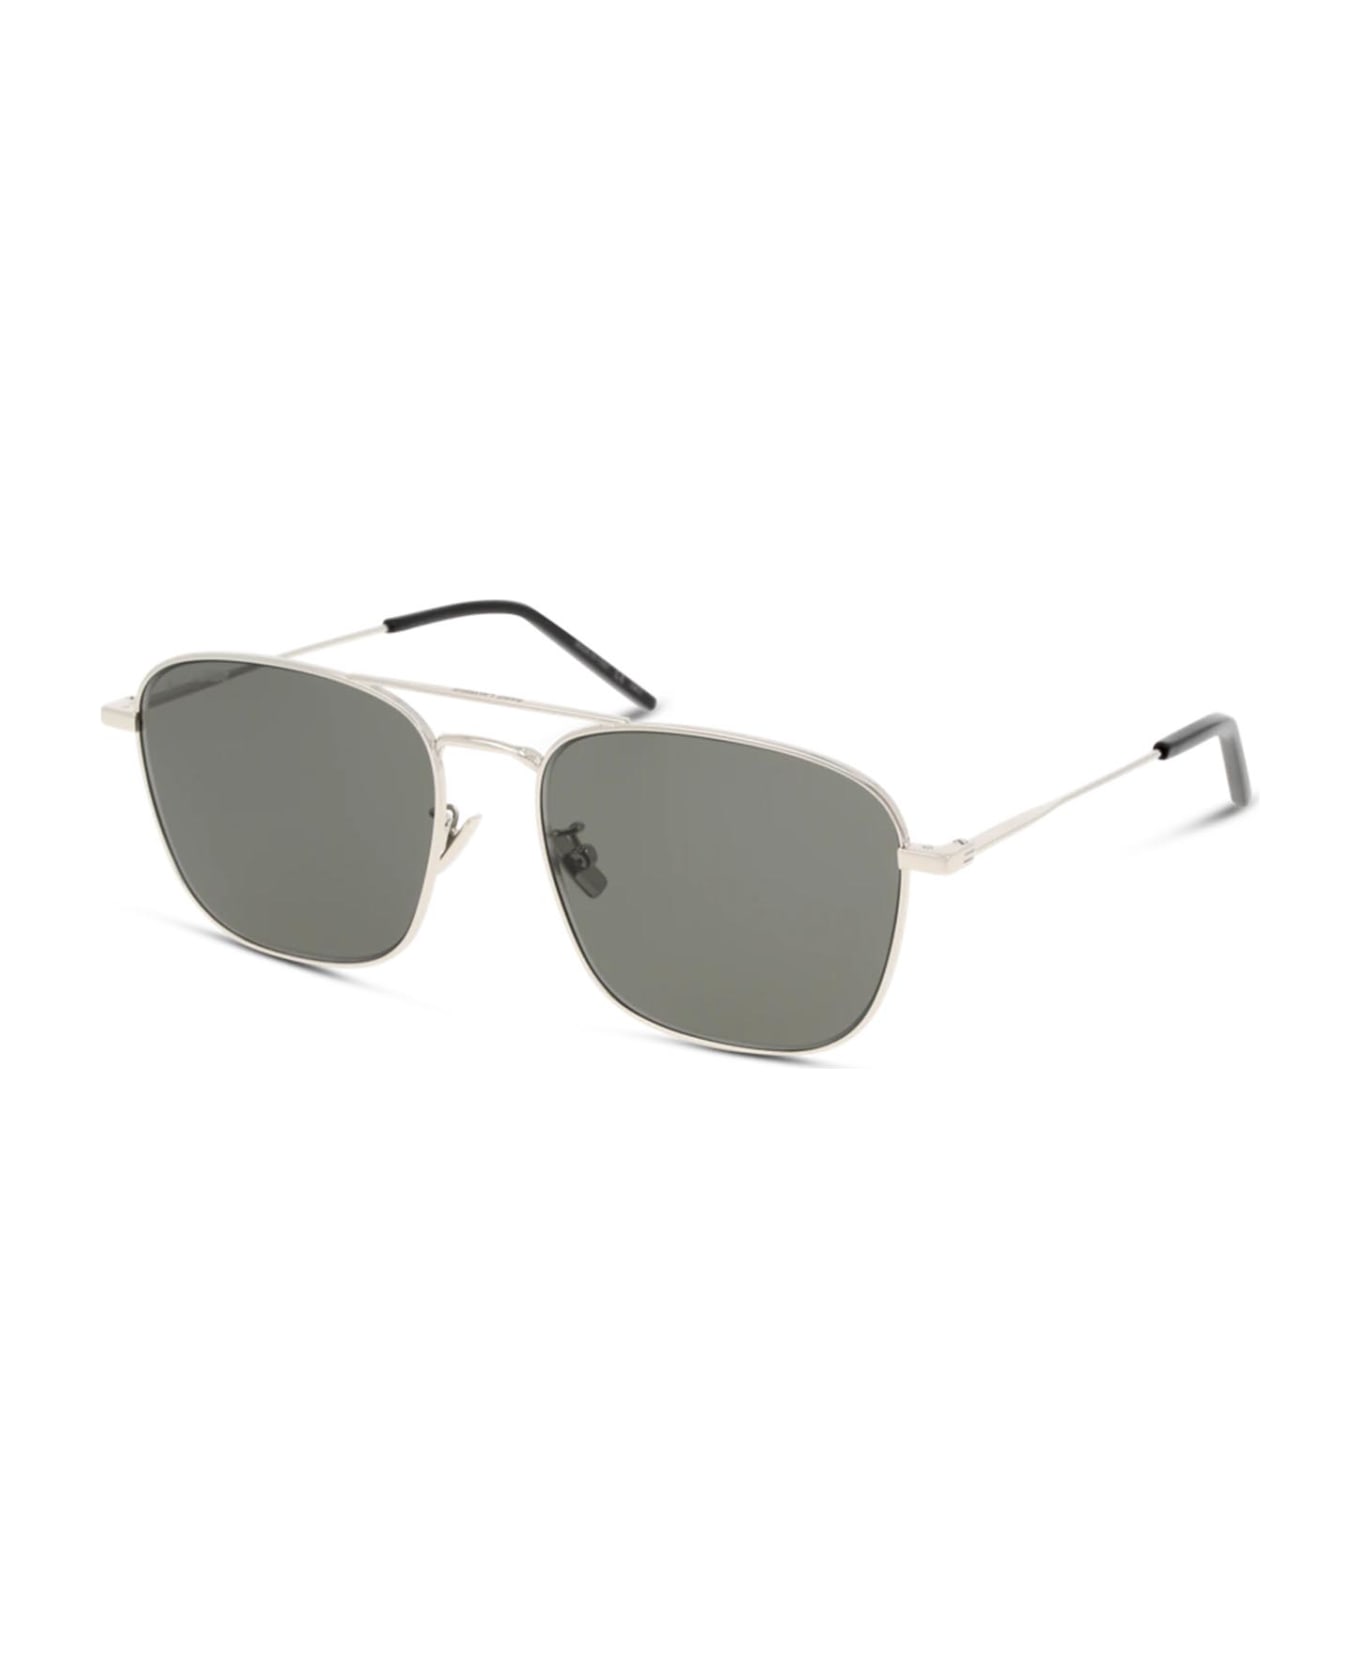 Saint Laurent Eyewear Sl 309 Silver Sunglasses - Silver